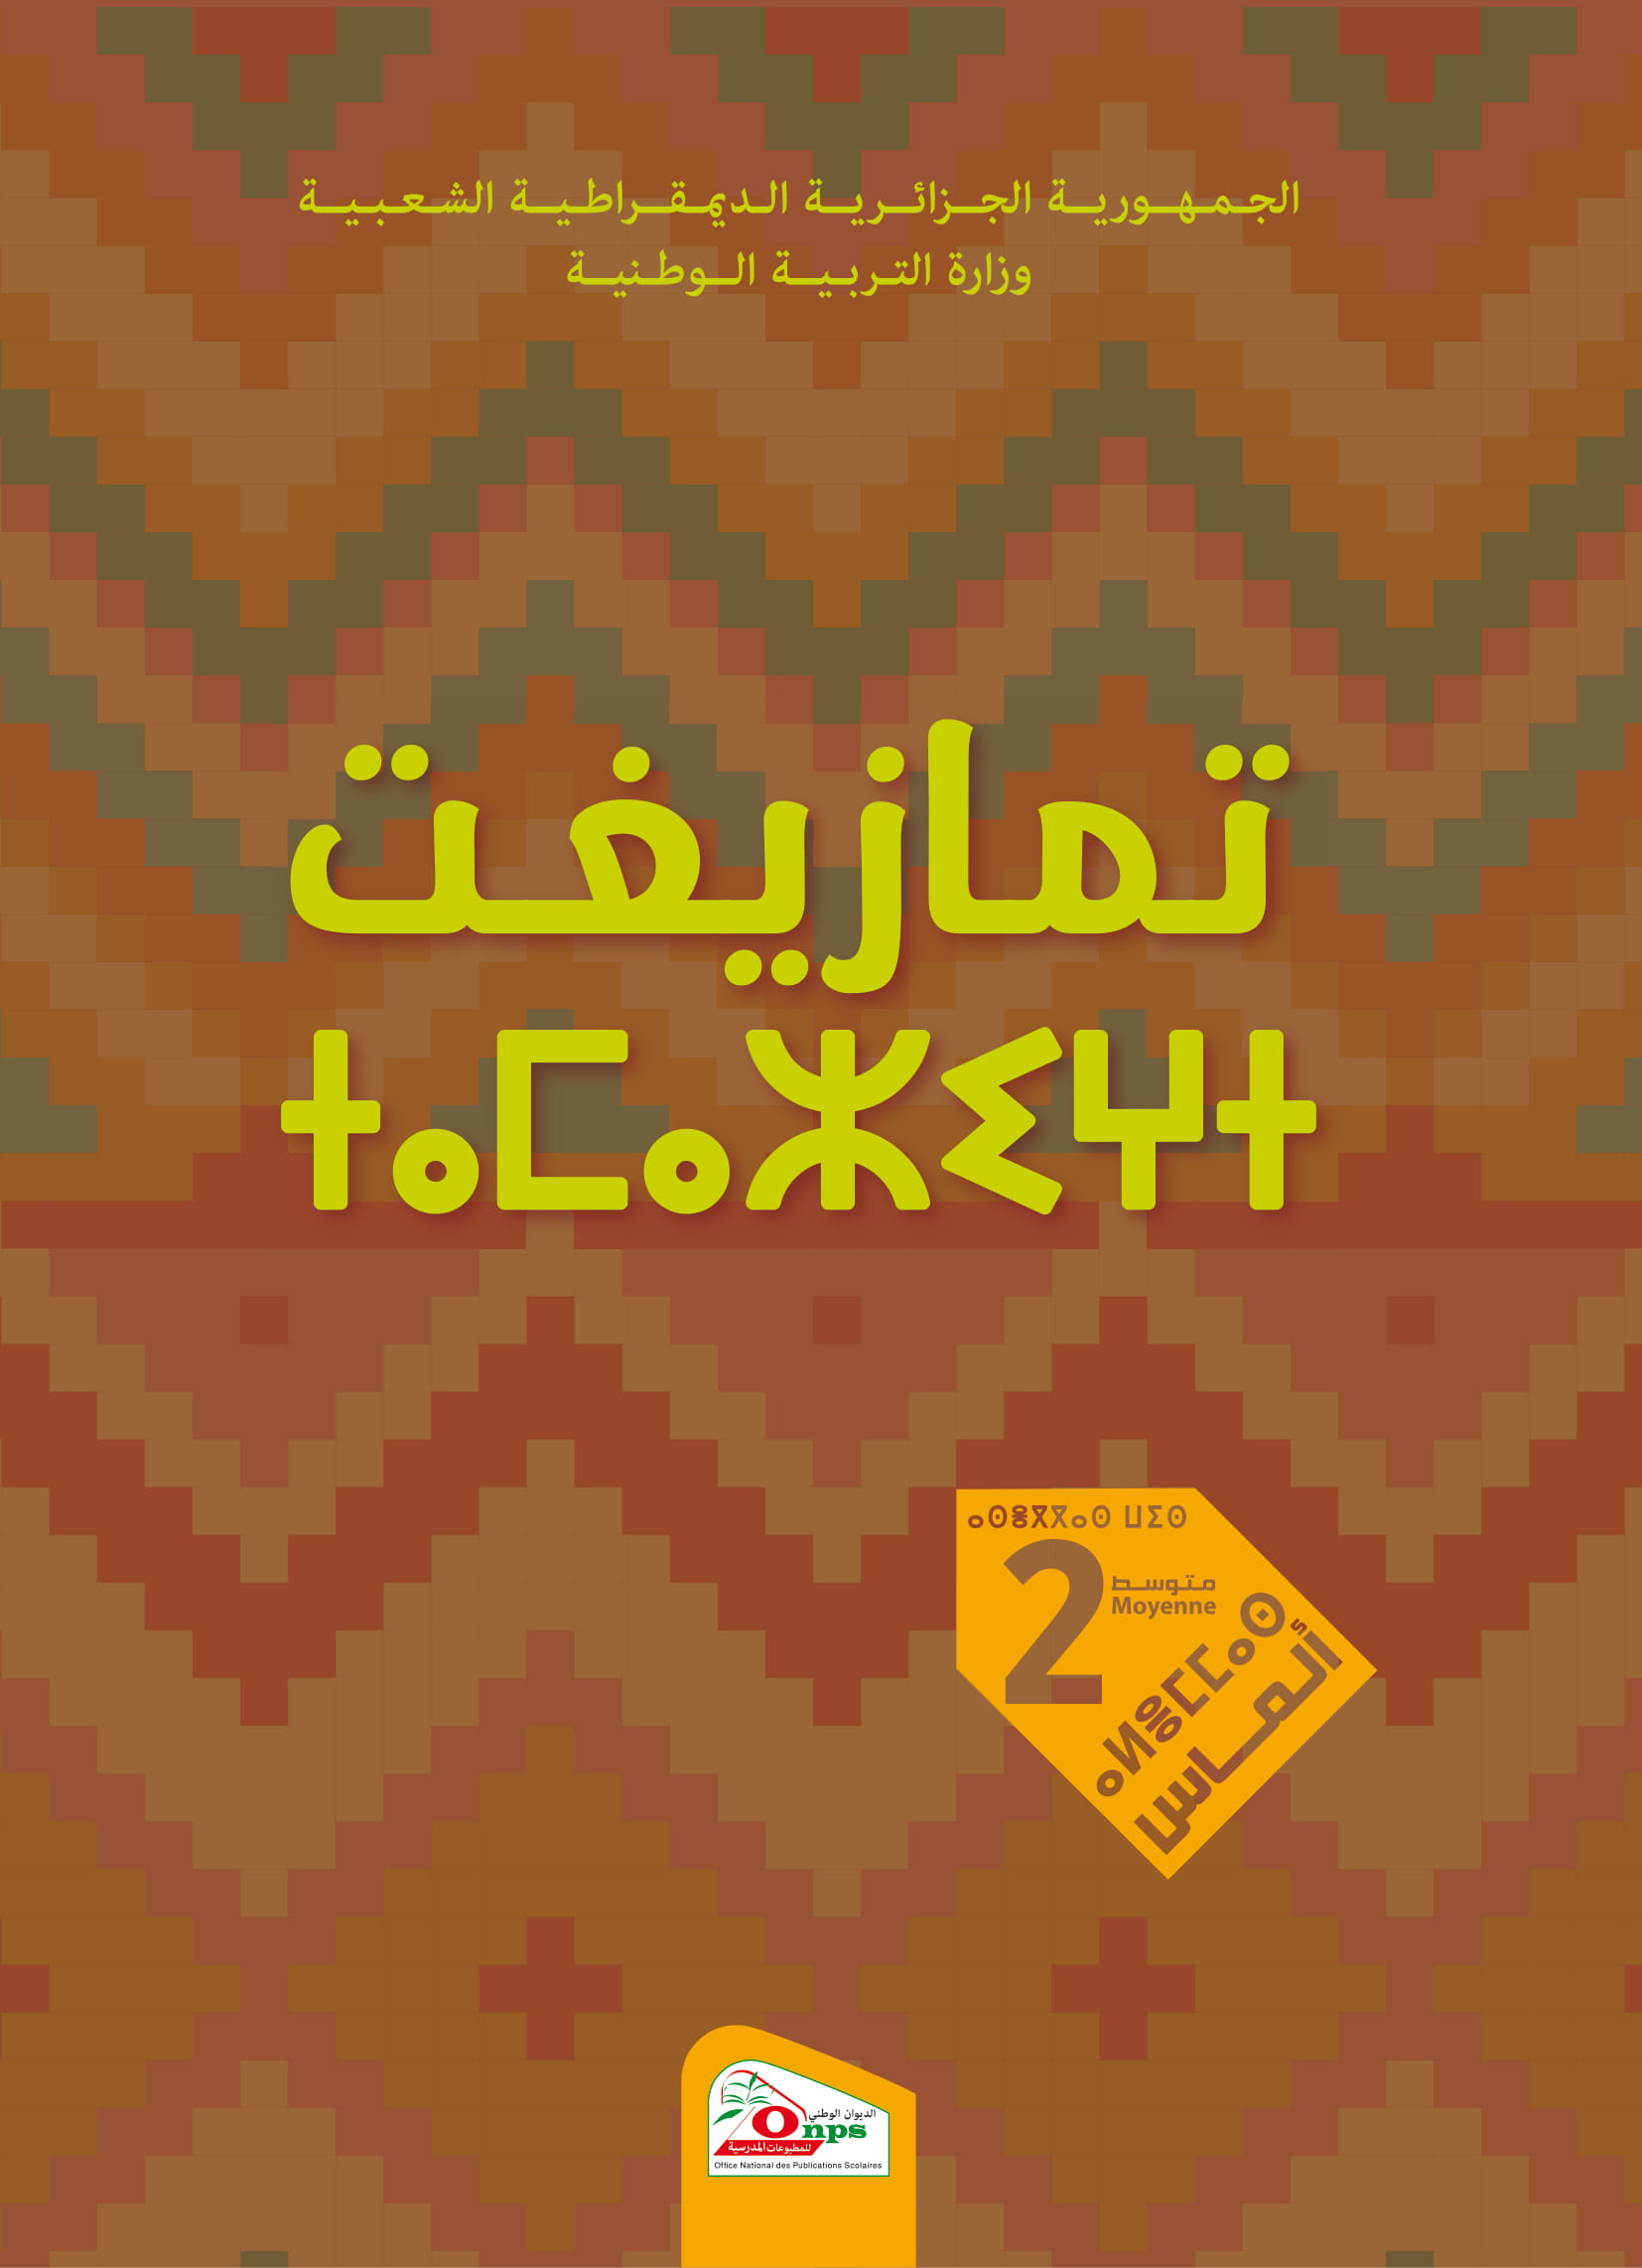 MS 814 Couverture Tamazigh arabe 2AM 1 - الديوان الوطني للمطبوعات المدرسية